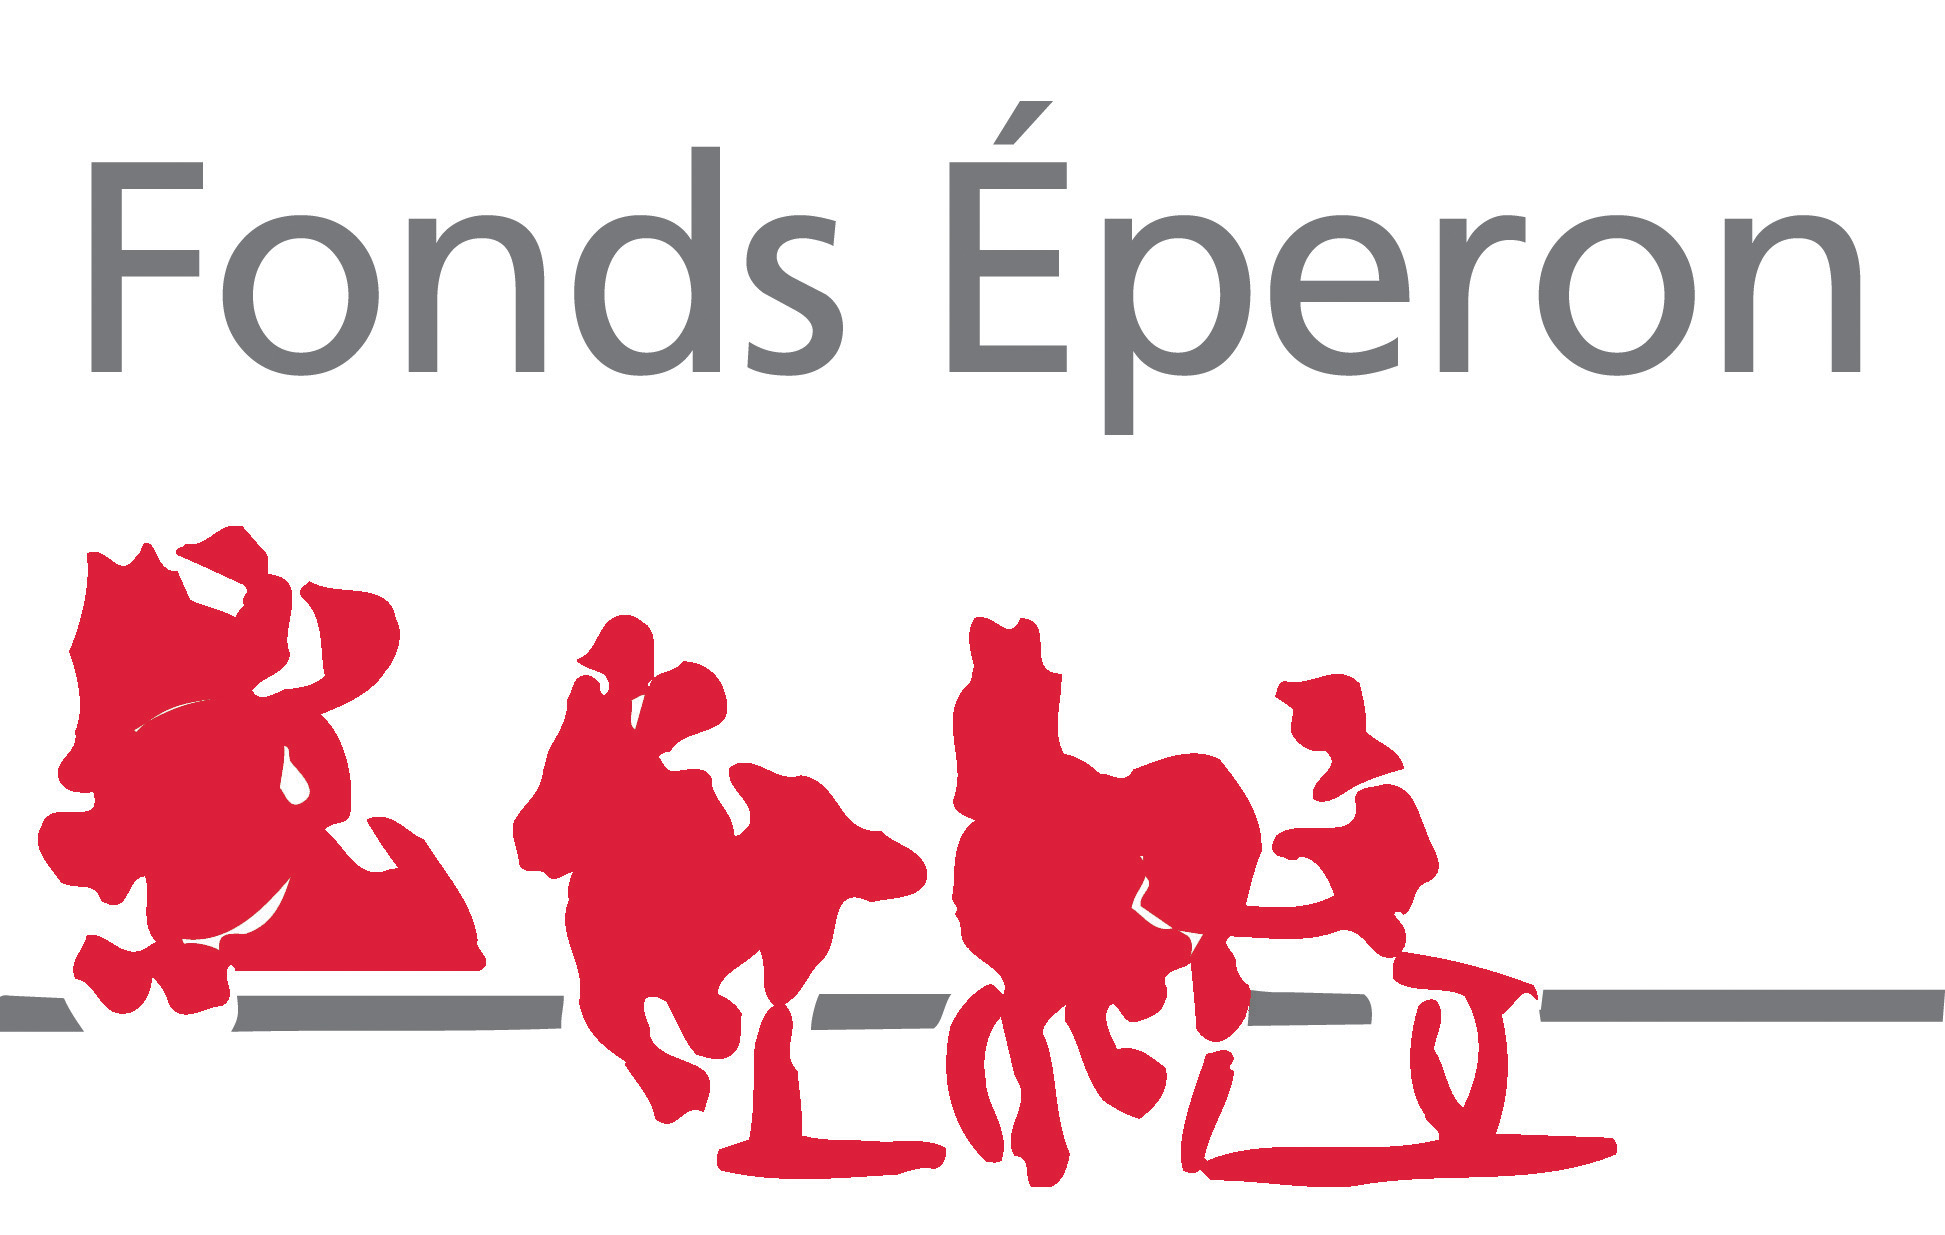 Fonds Eperon